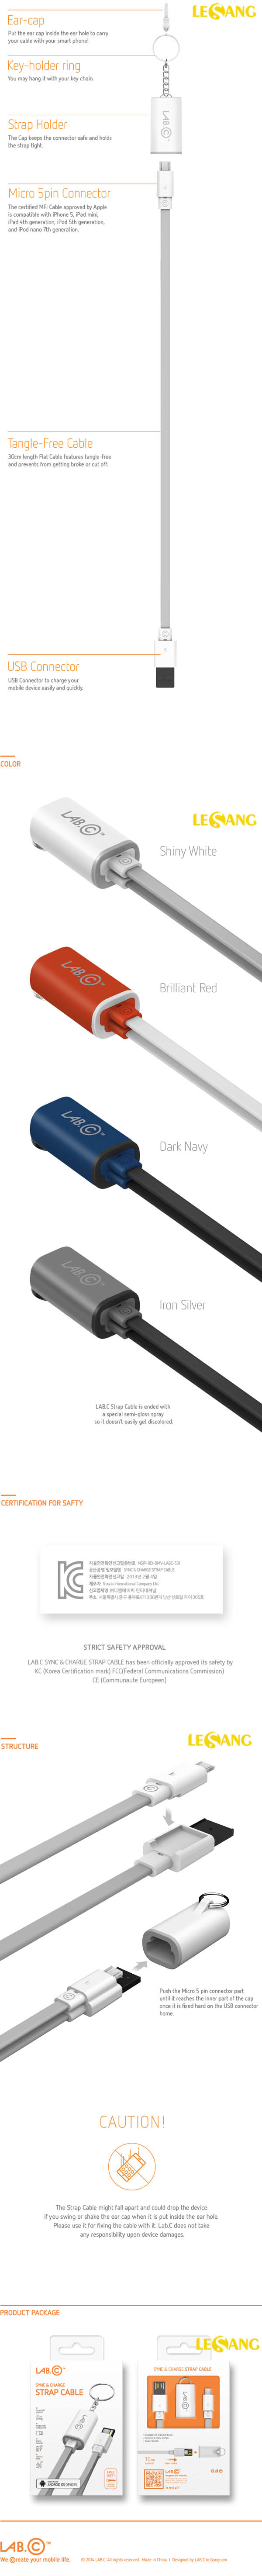 Cáp Micro USB LAB-C 30cm (Korea) 236